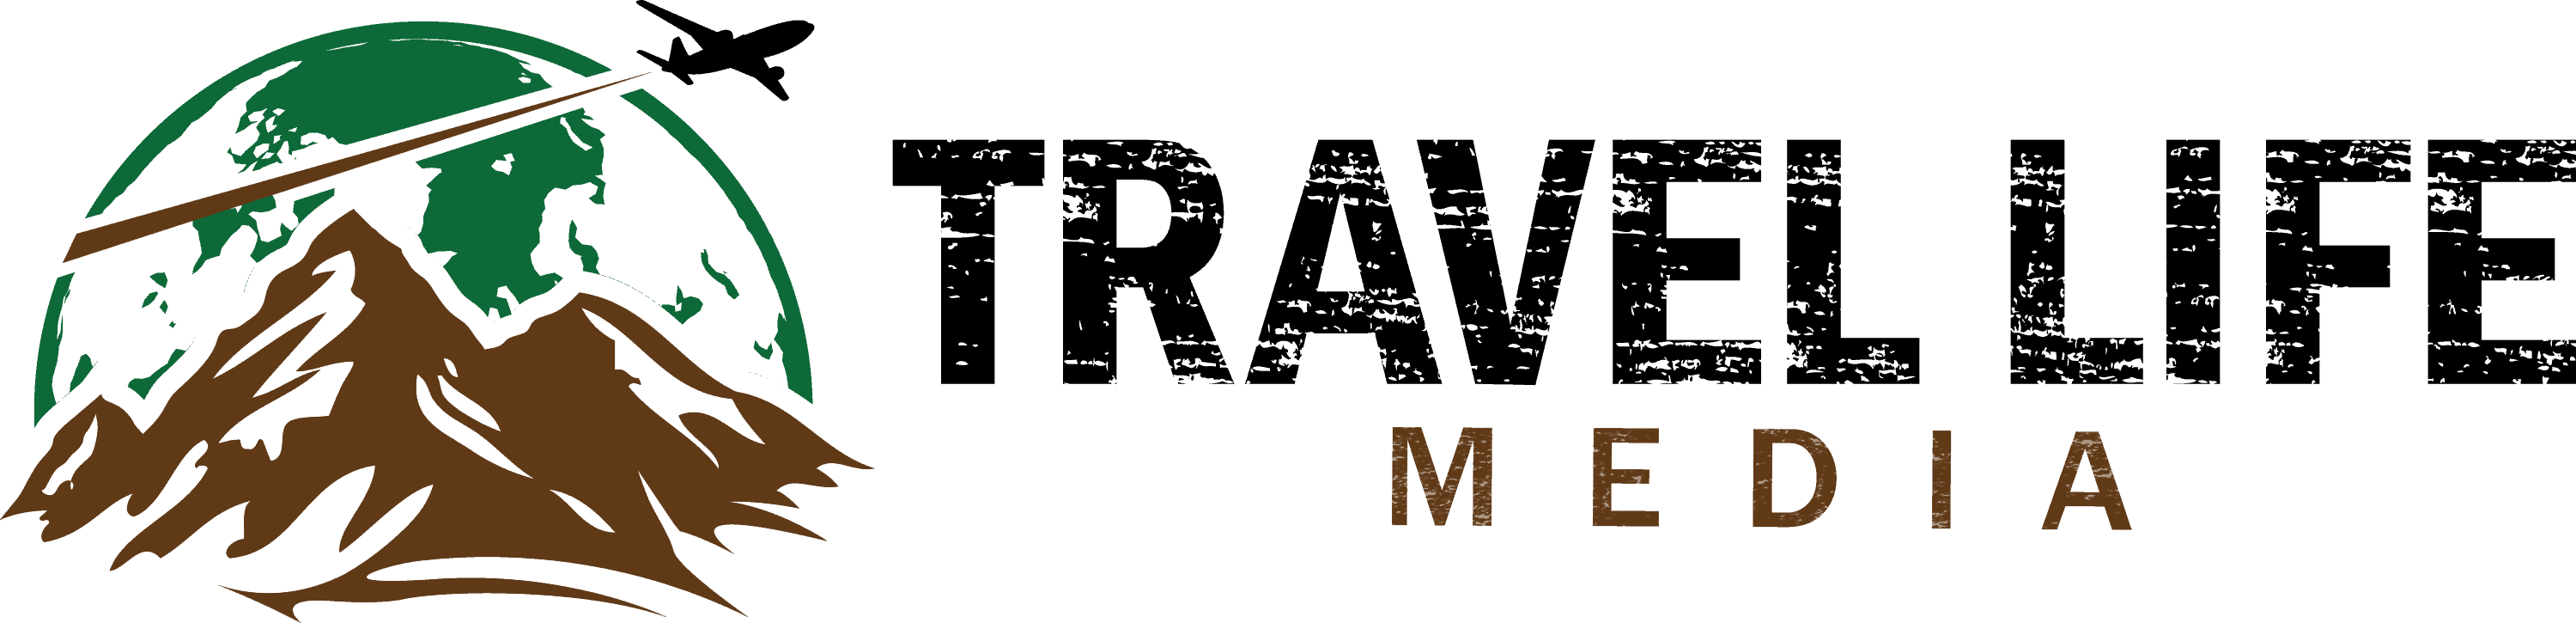 MSN Travel Logo - MSN - Travel Life Media: Travel and Tourism Marketing That Works